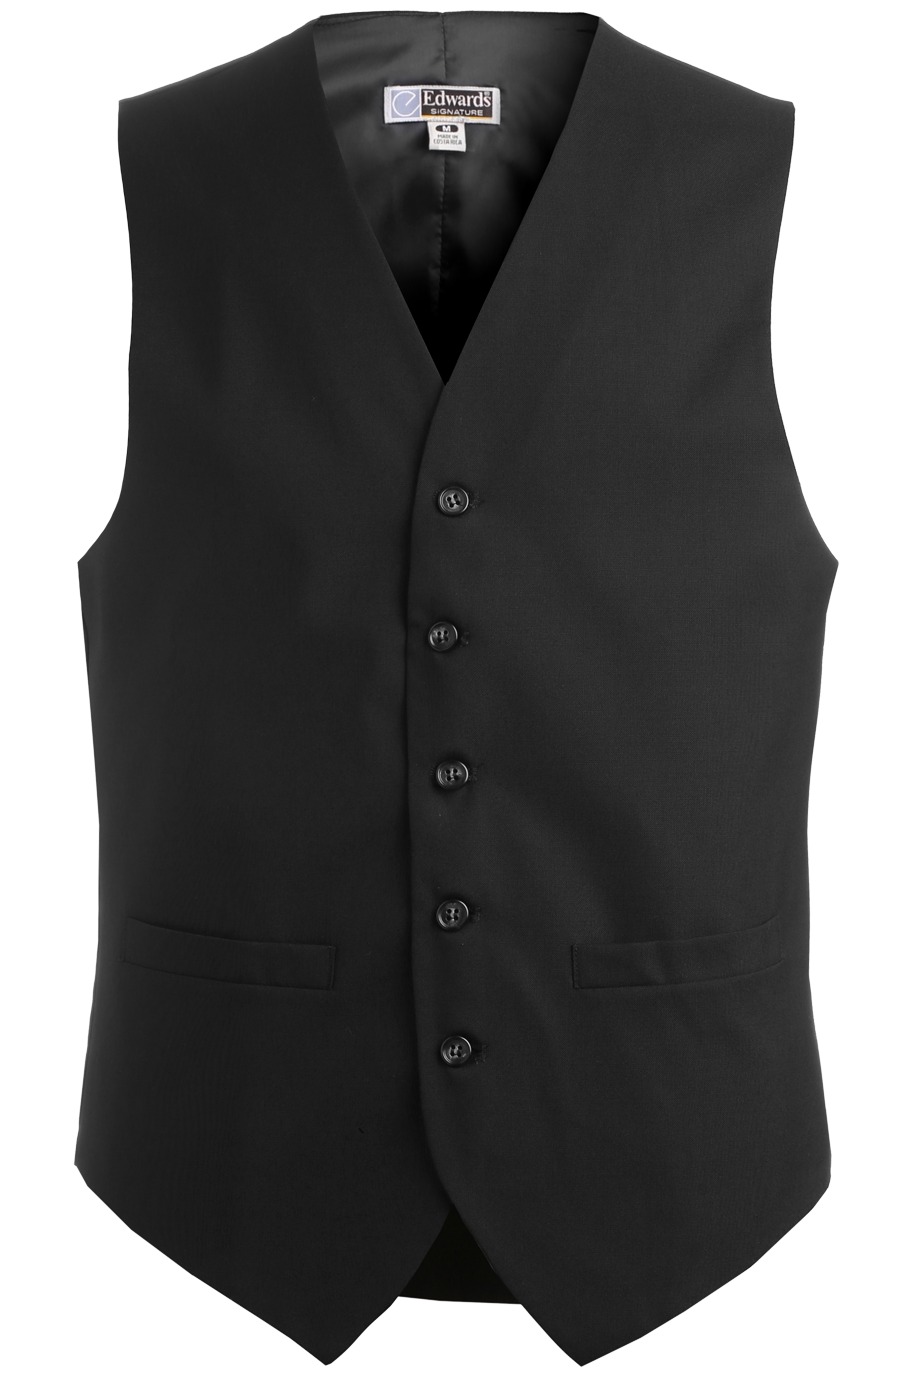 Edwards Garment 4680 - High Button Vest